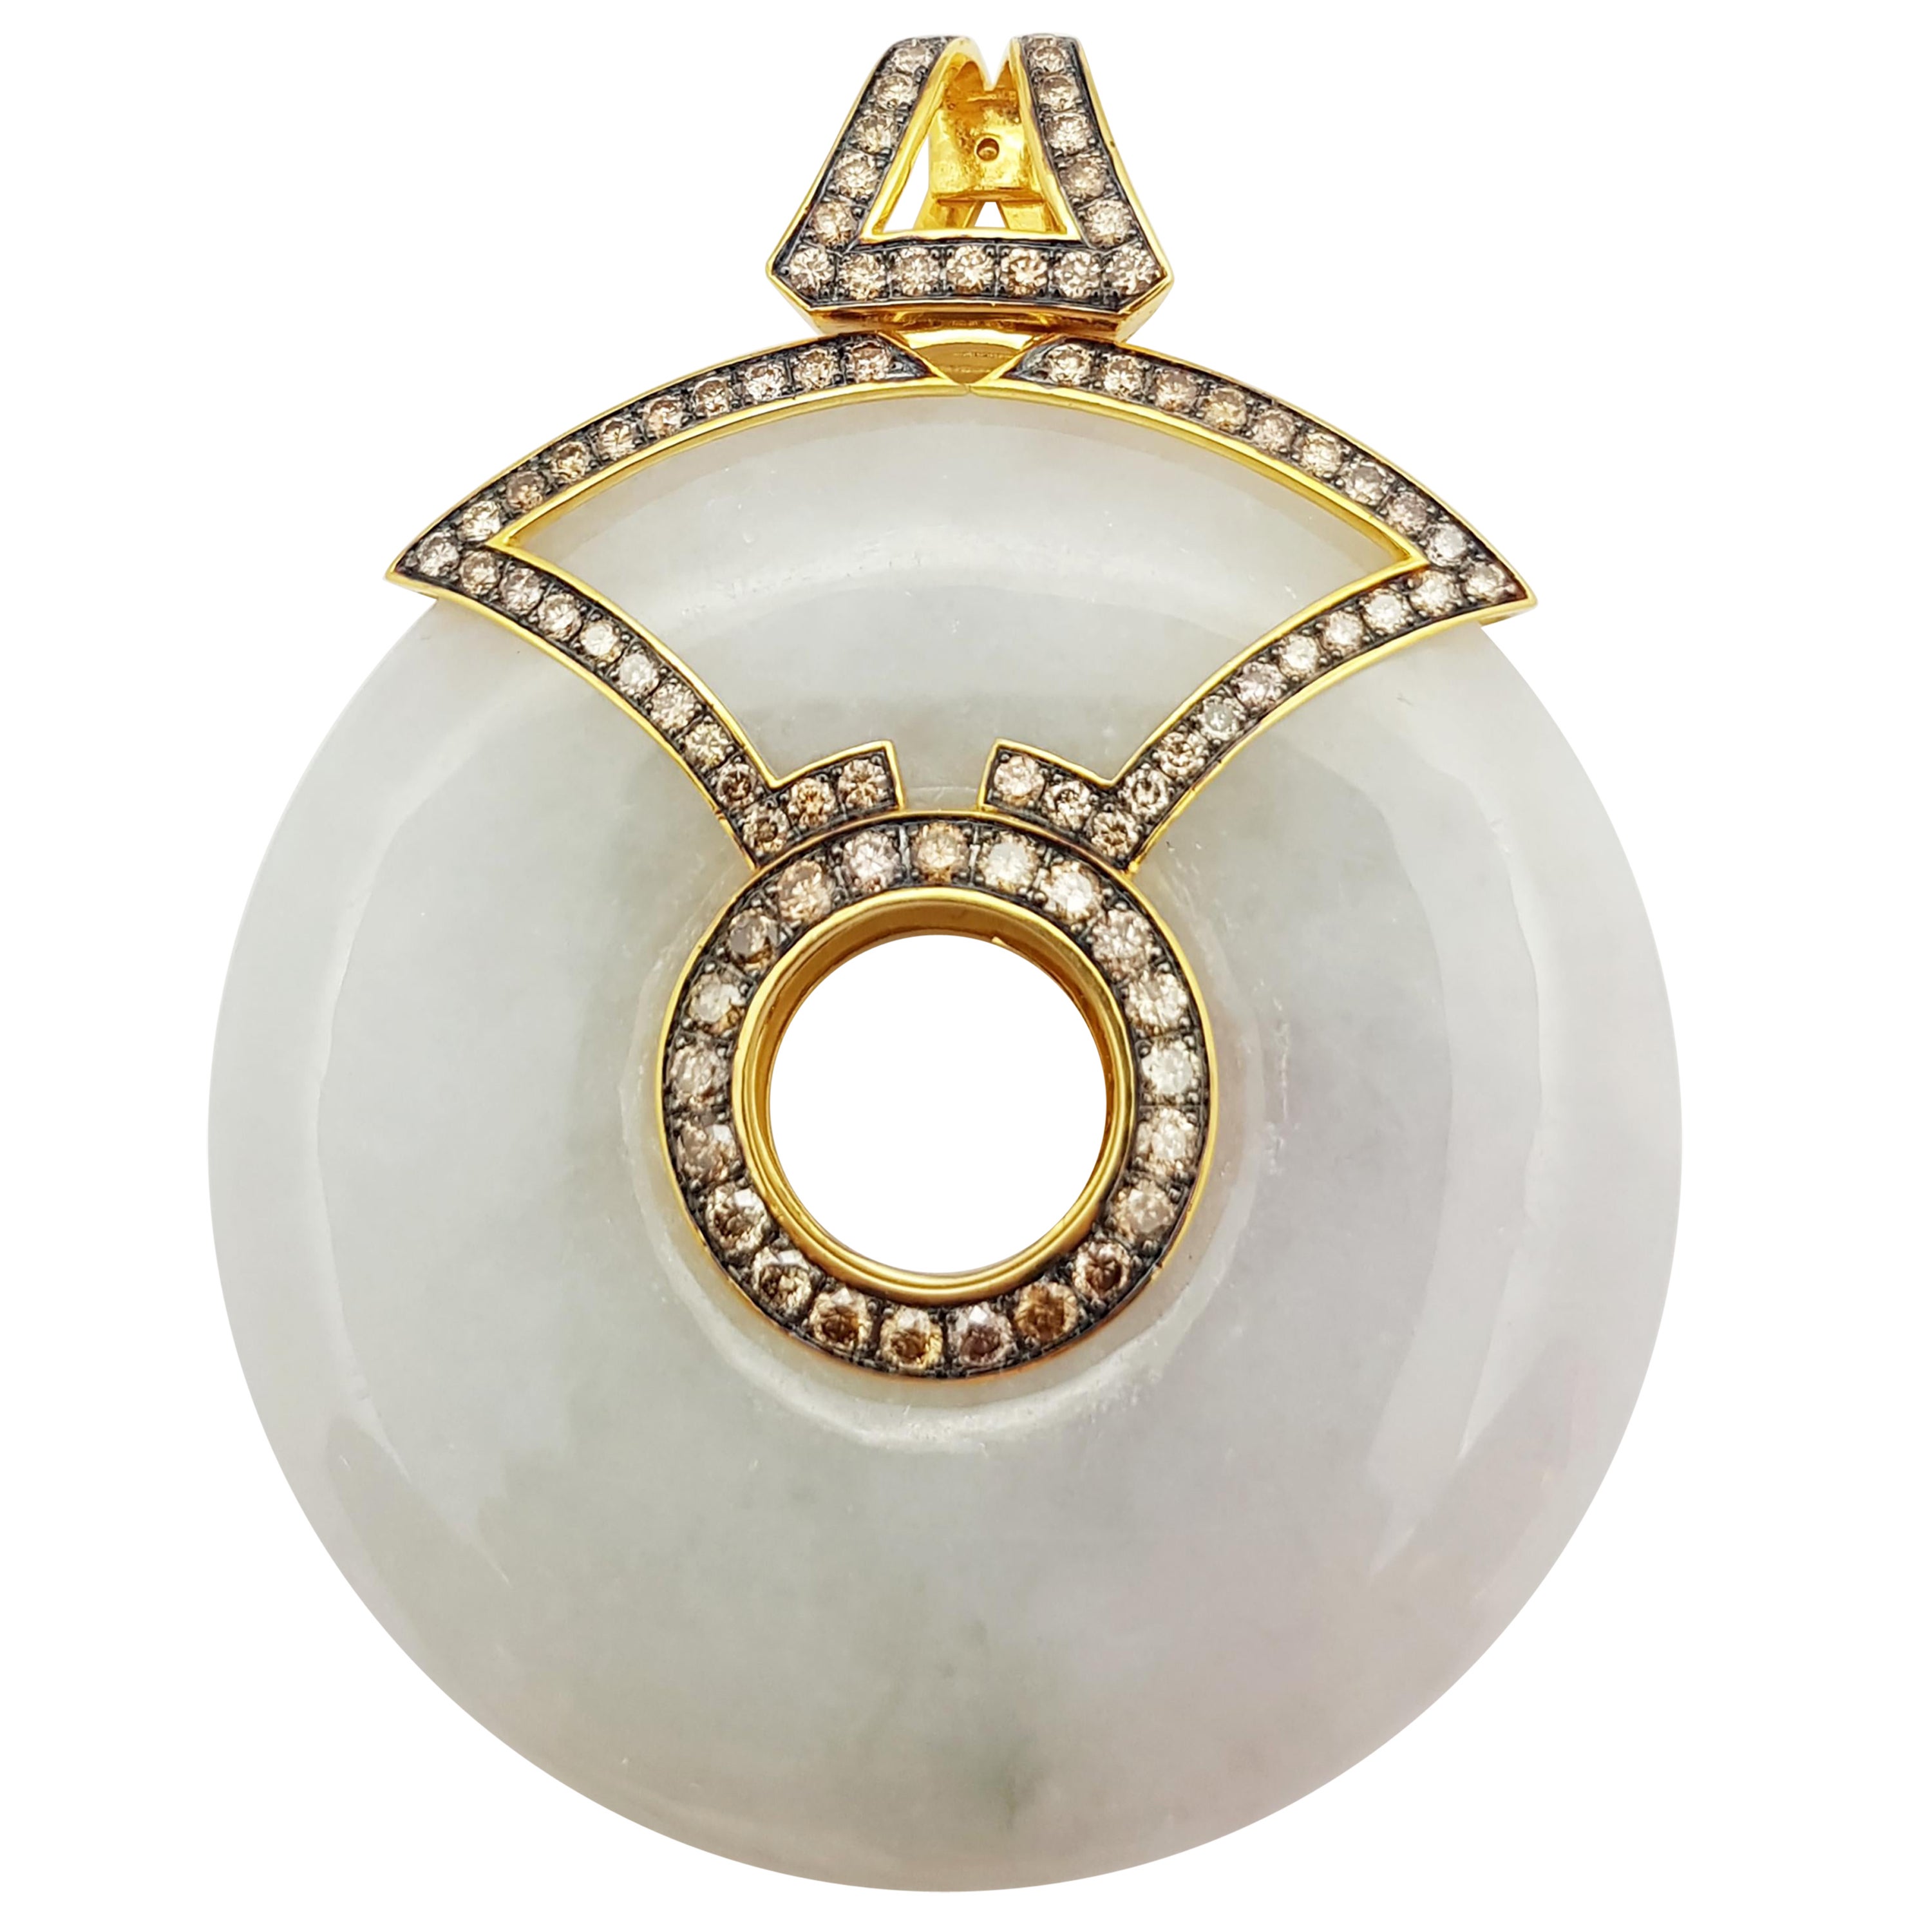 Pendentif en jade et diamants bruns sertis dans des montures en or 18 carats